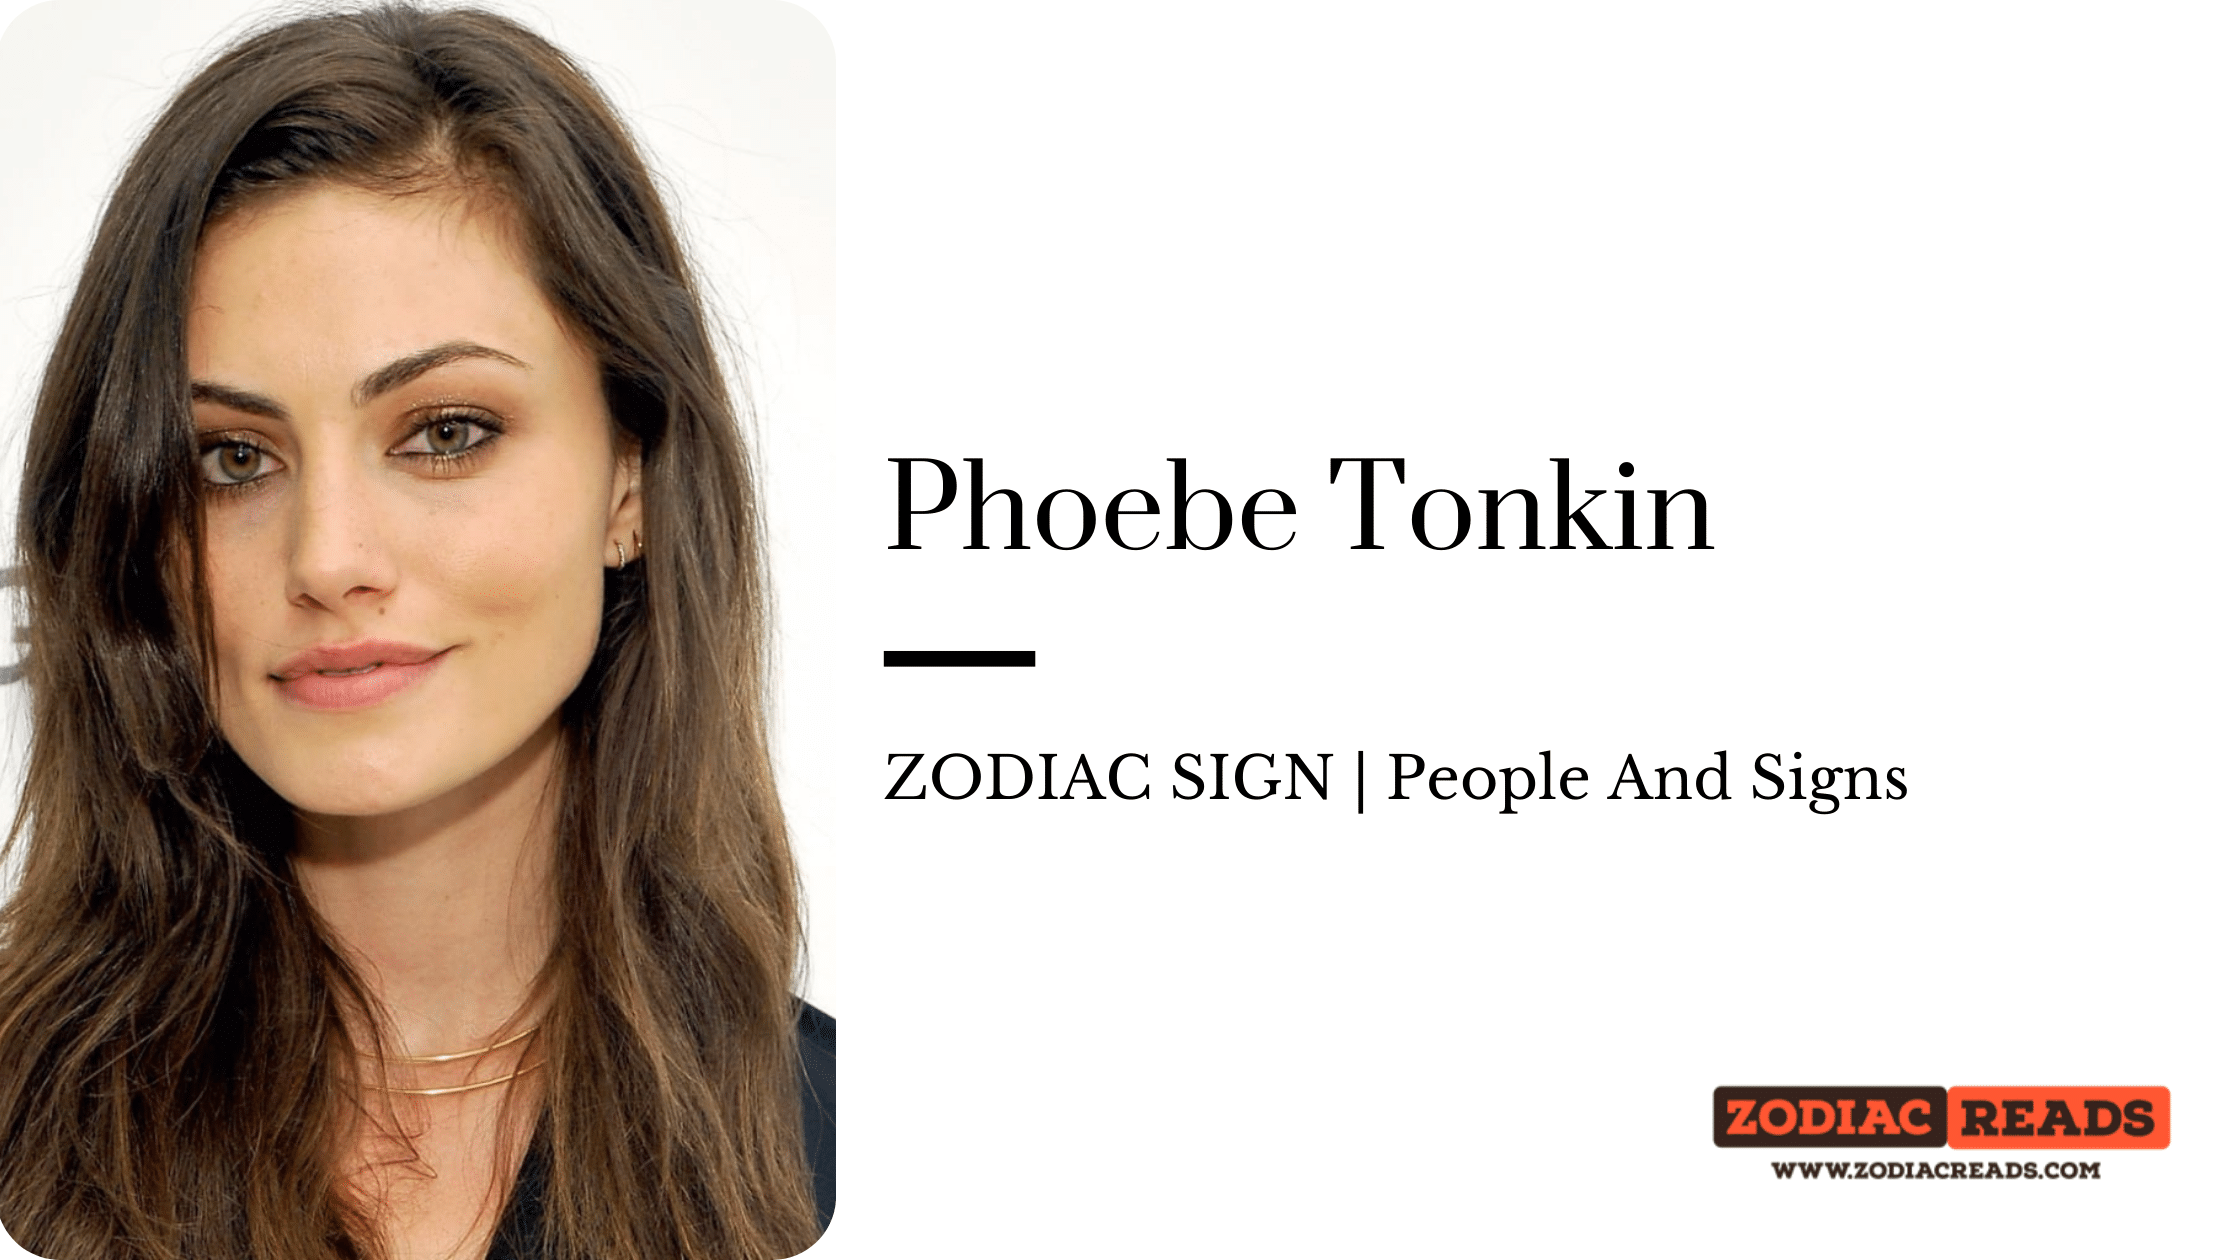 Phoebe Tonkin zodiac